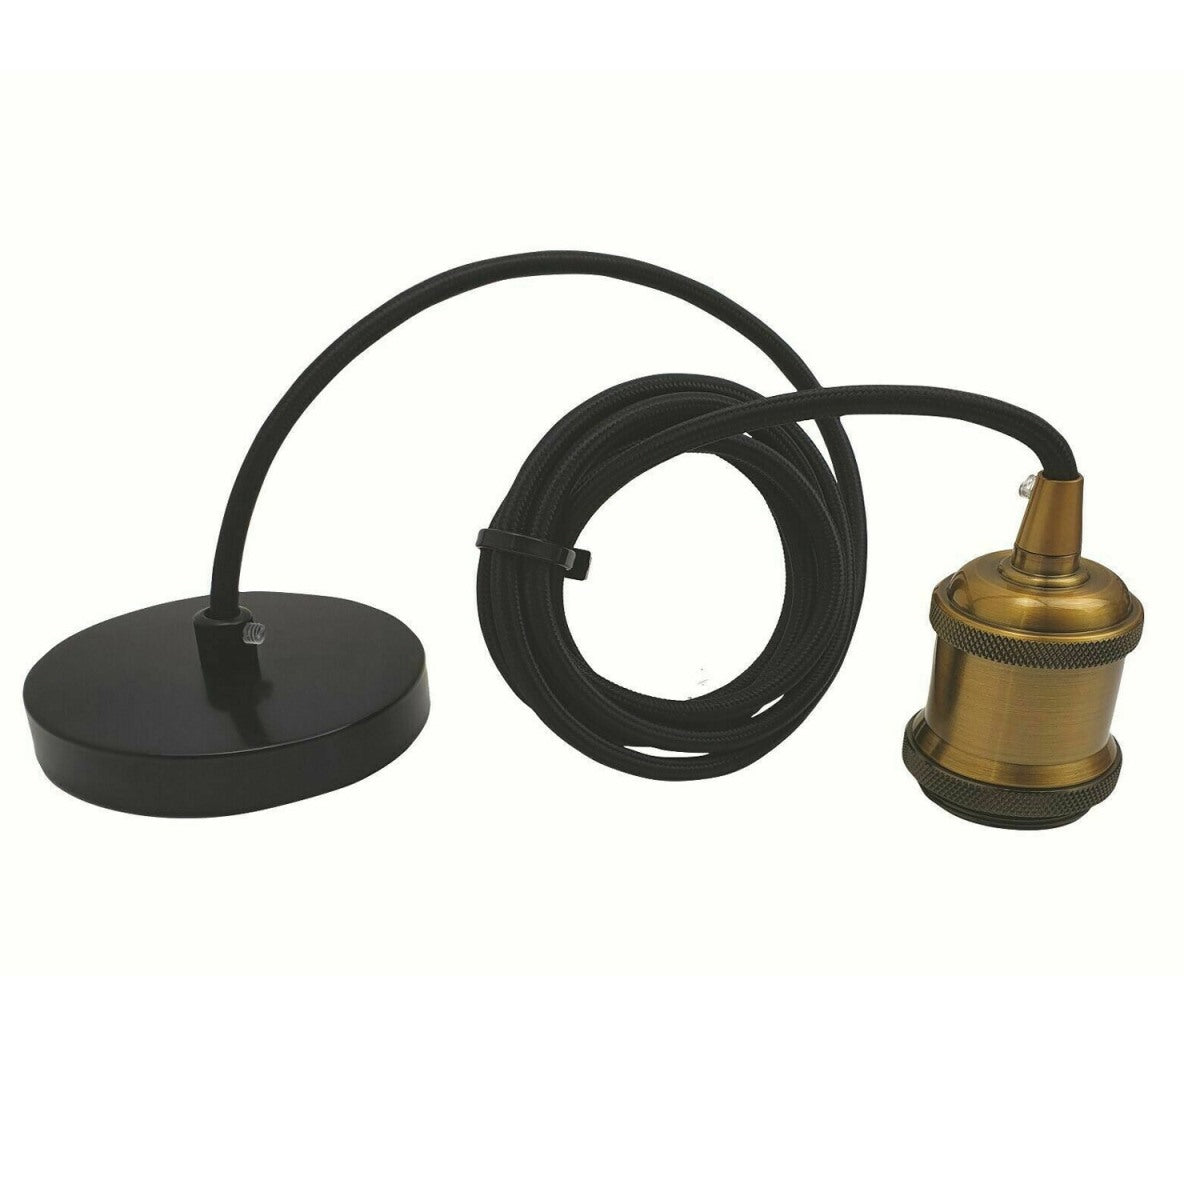 1m E27 Base Black Cable Yellow Brass Holder~1704 - electricalsone UK Ltd